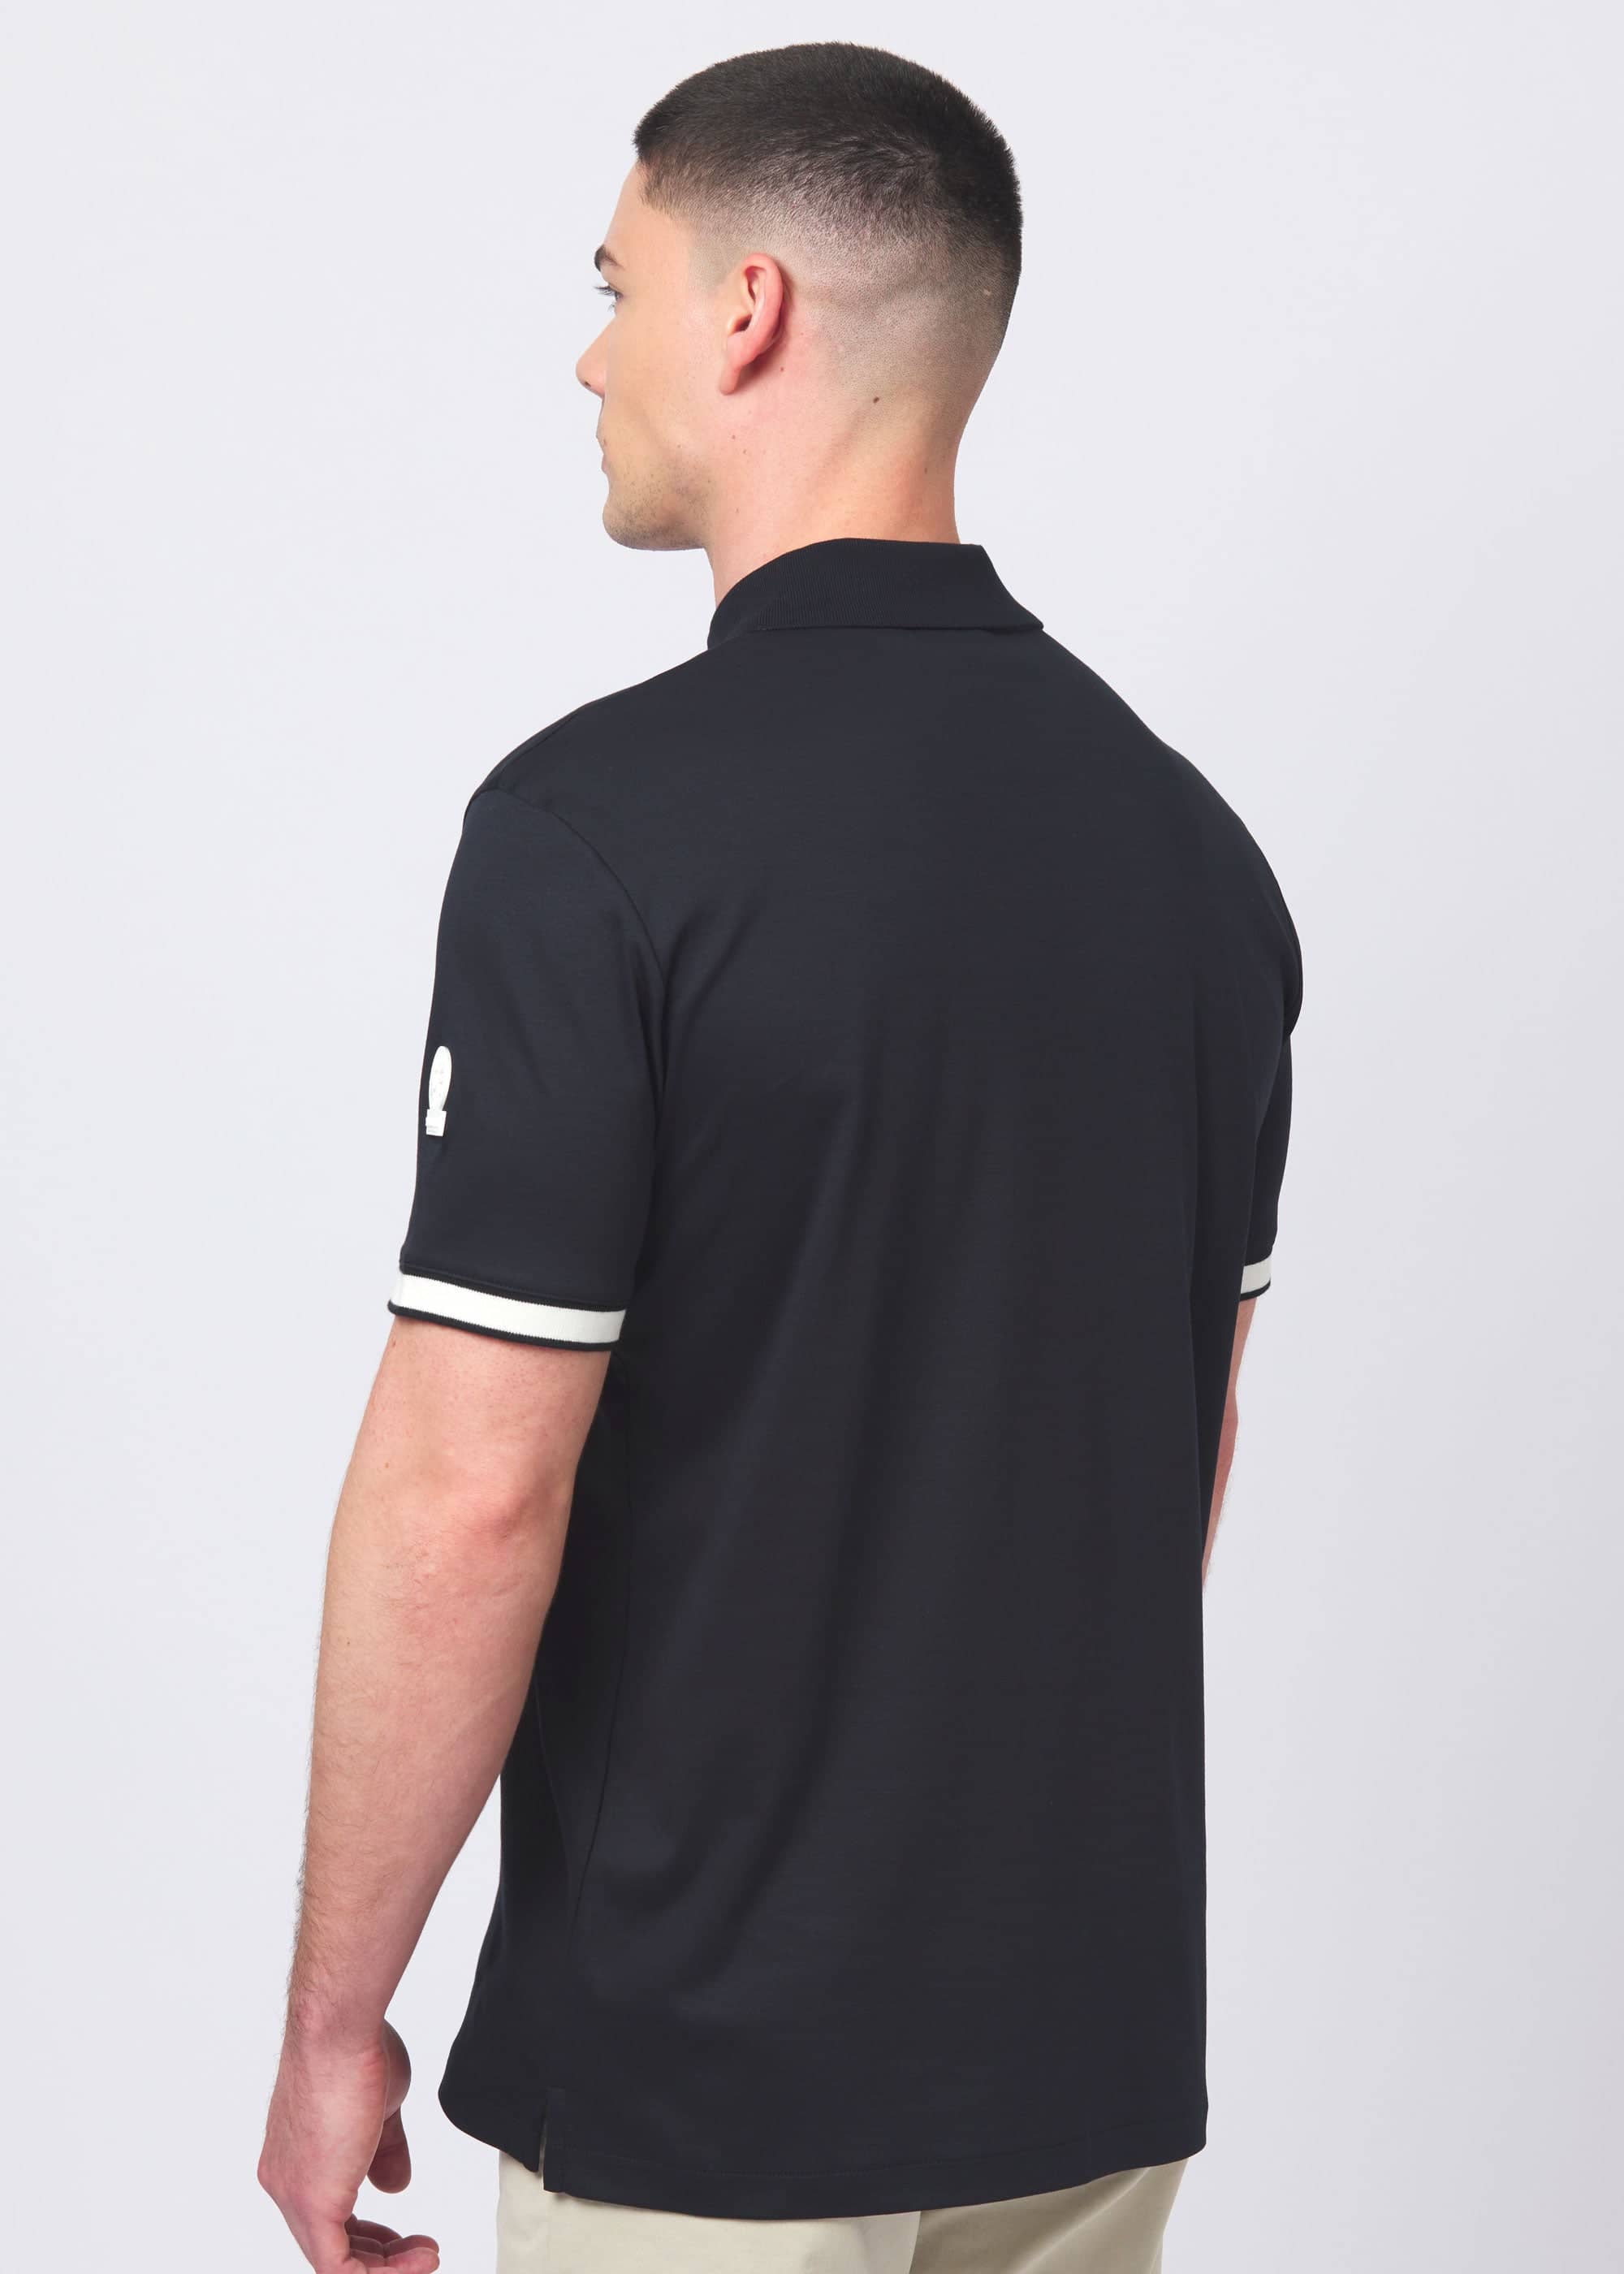 Sandbanks Silicone Zip Polo Shirt - Black